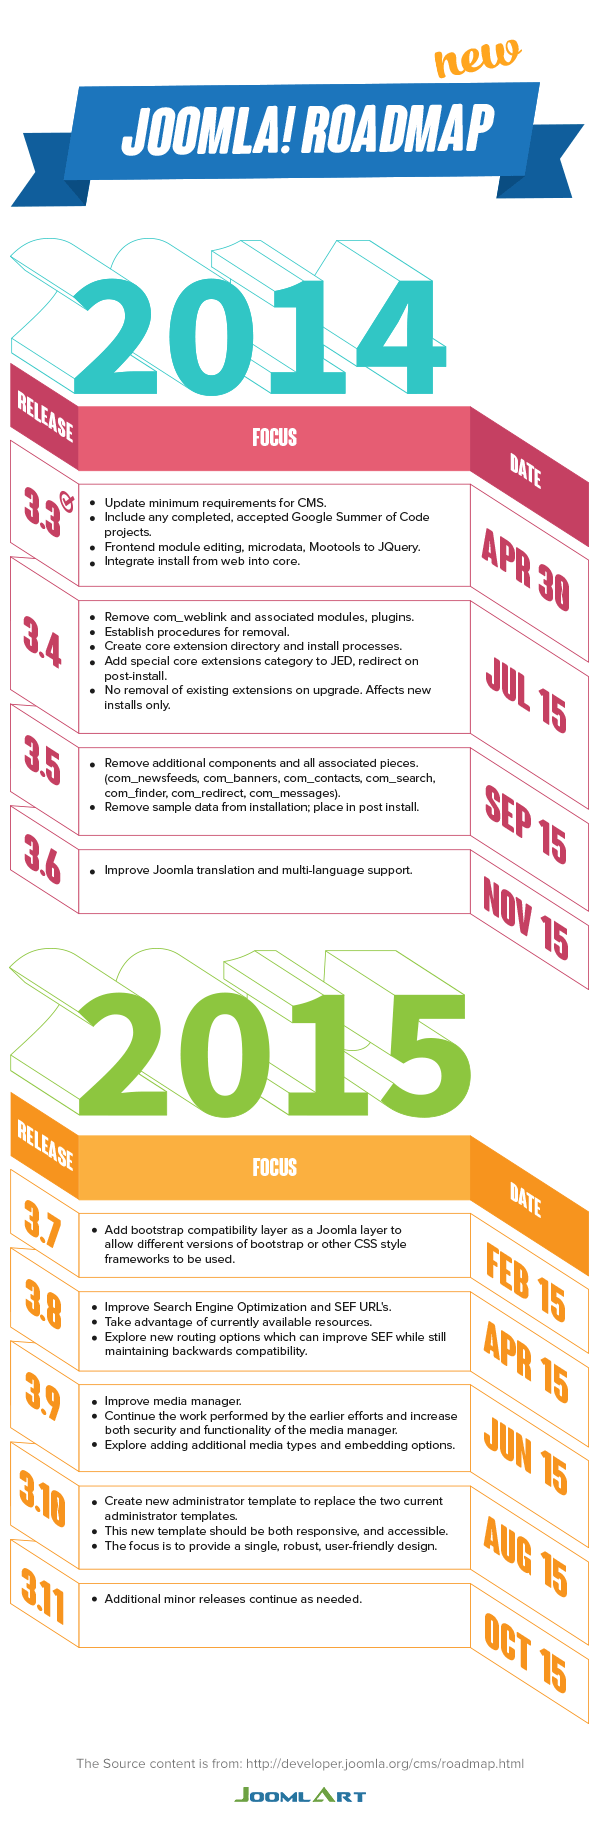 Joomla roadmap for 2014-2015